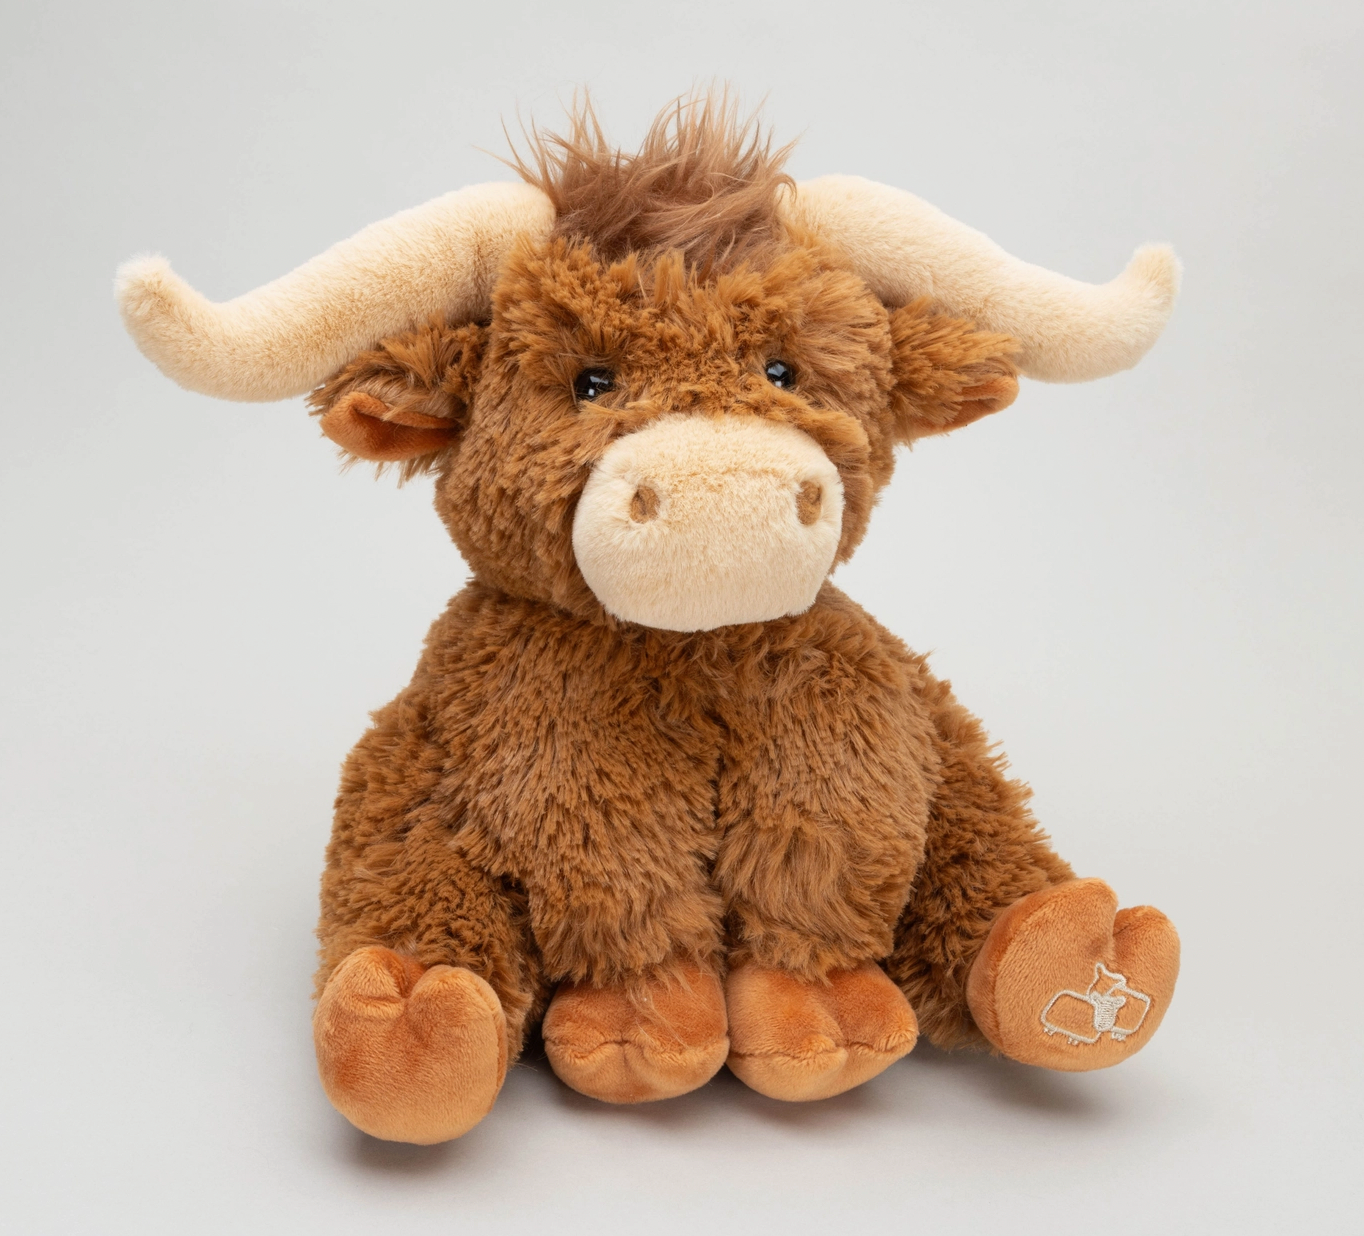 Highland Cow Plush Toy